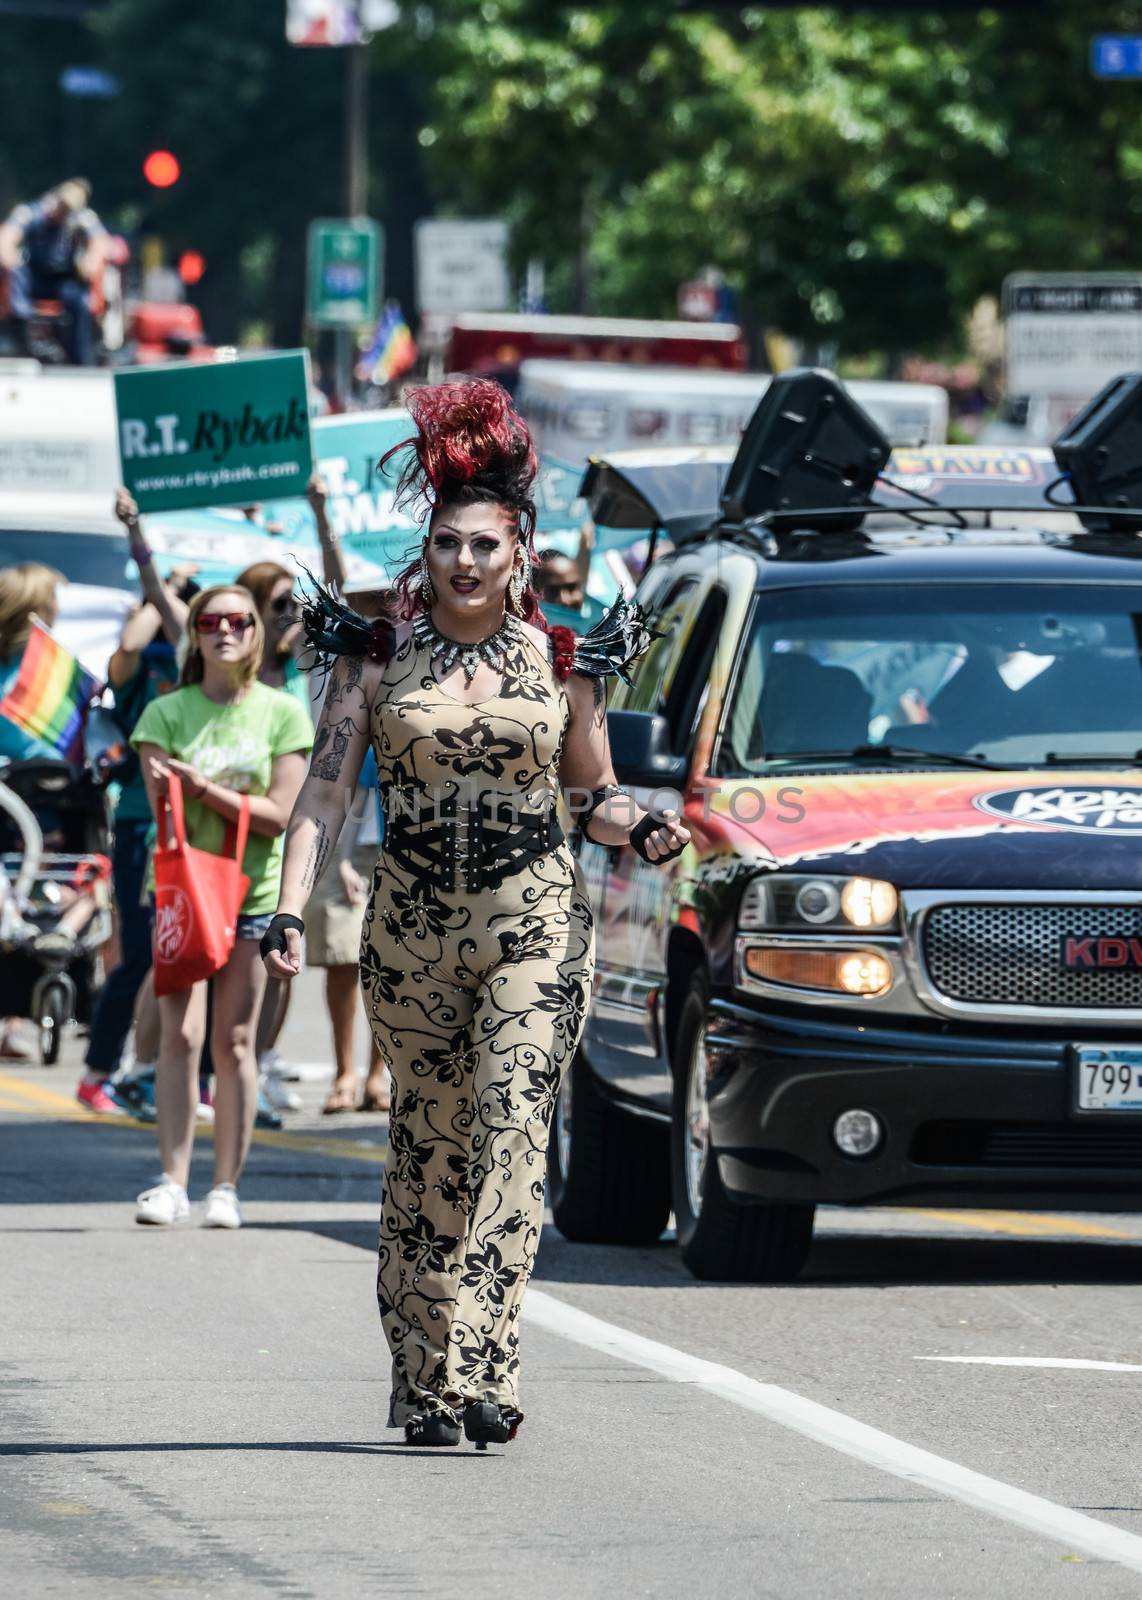 Minneapolis, Minnesota - June 30: Twin Cities LGBT Pride Parade 2013, in Minneapolis,MN, on June 30, 2013.